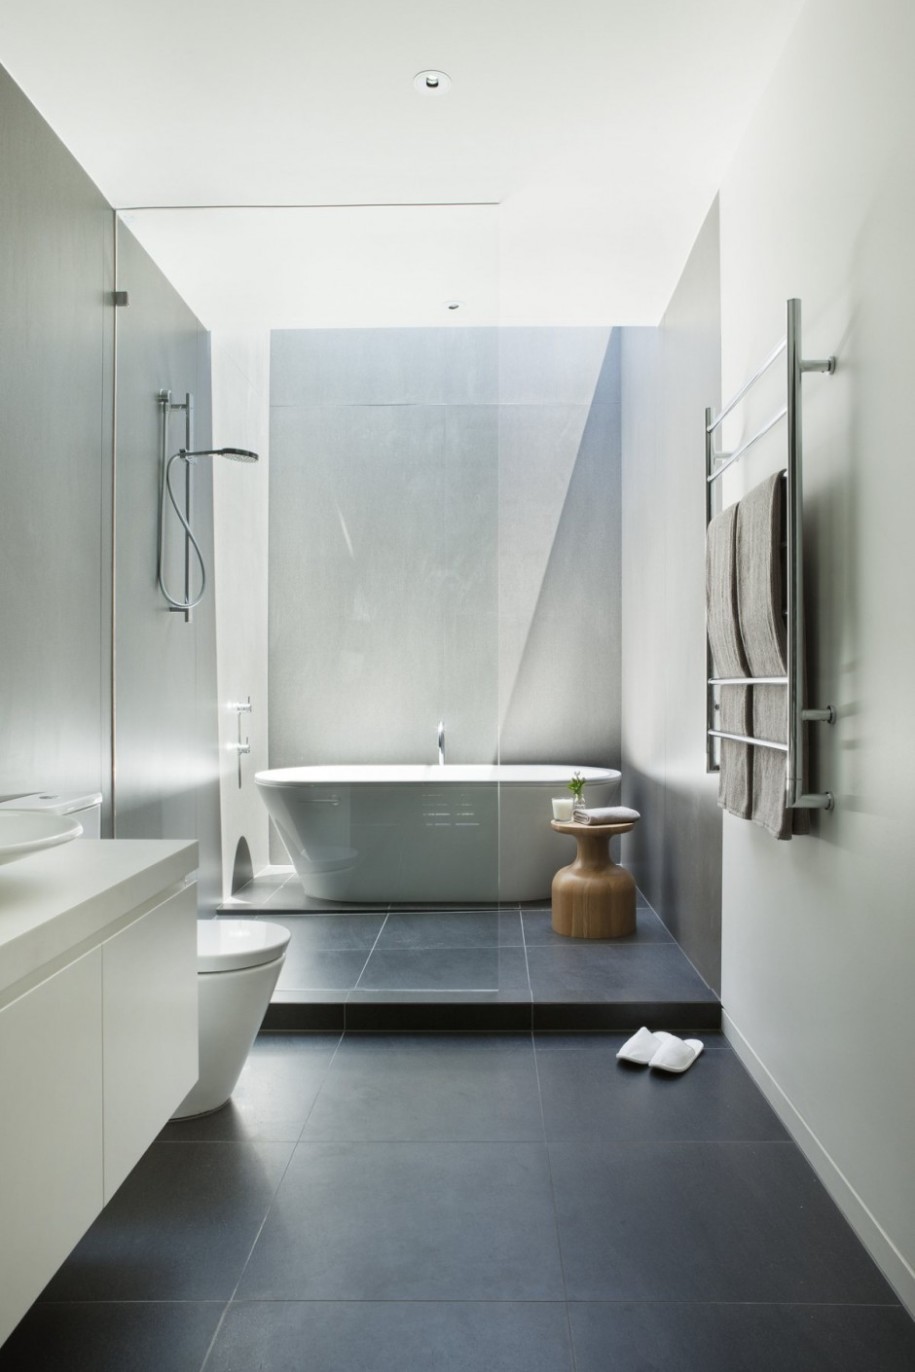 Bathroom Stylish Bathroom White Ceiling Ceramics Floor Modern Design Bathtub 915x1372 Technological Infinity Bath for Comfort